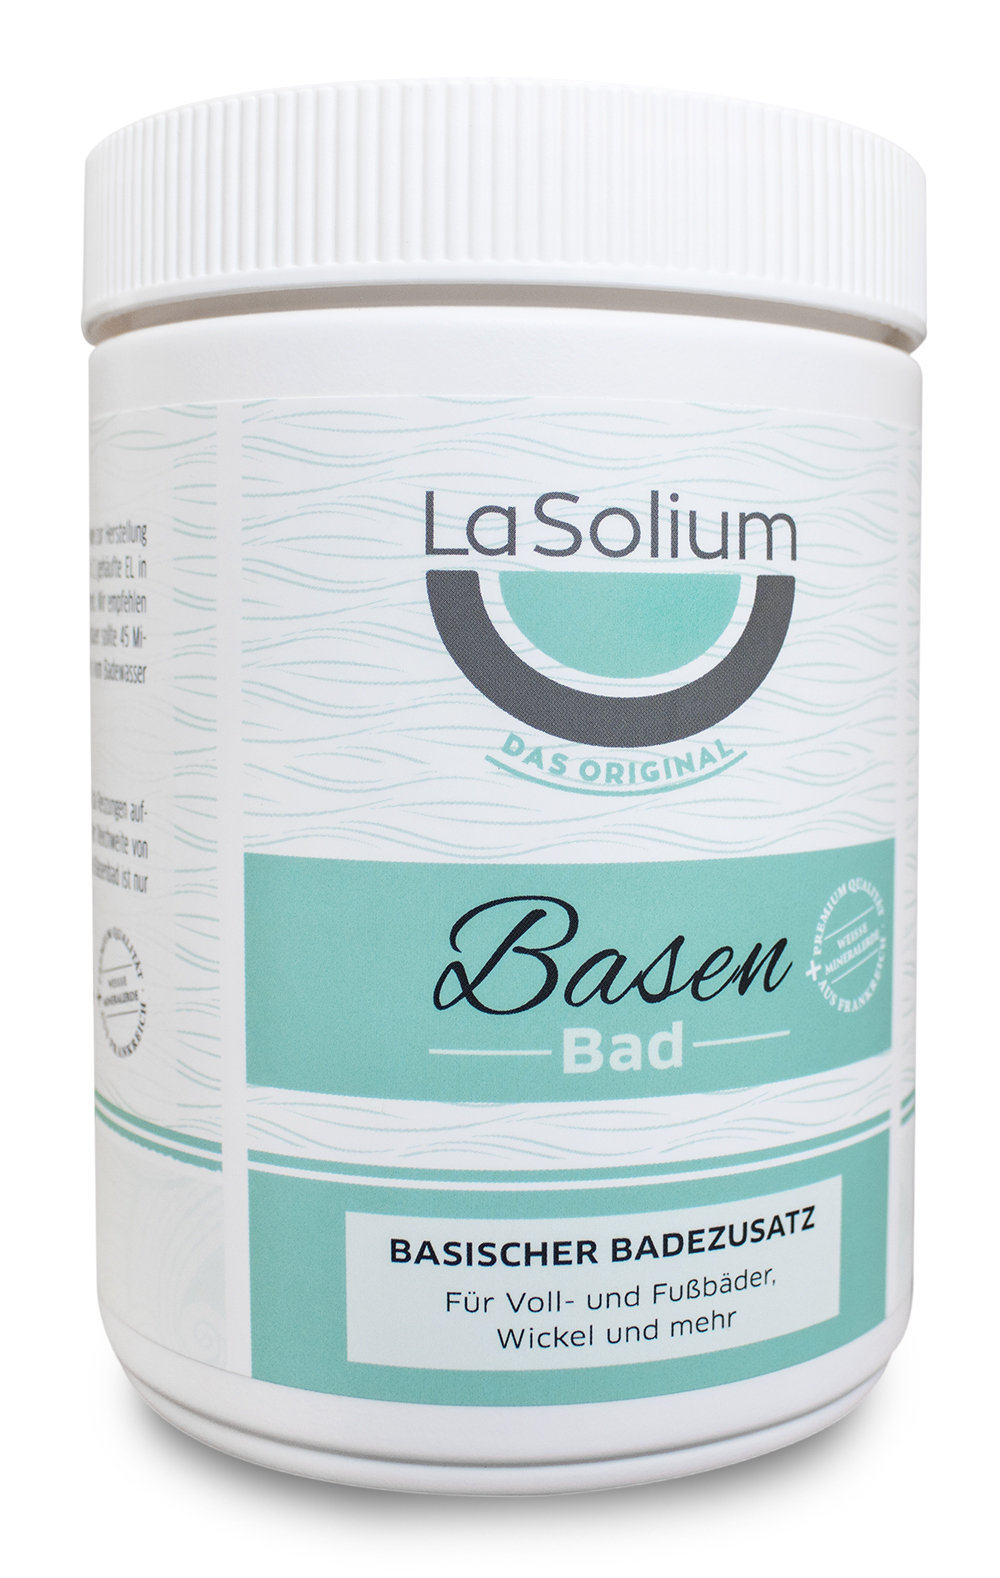 LaSoloium Basenbad